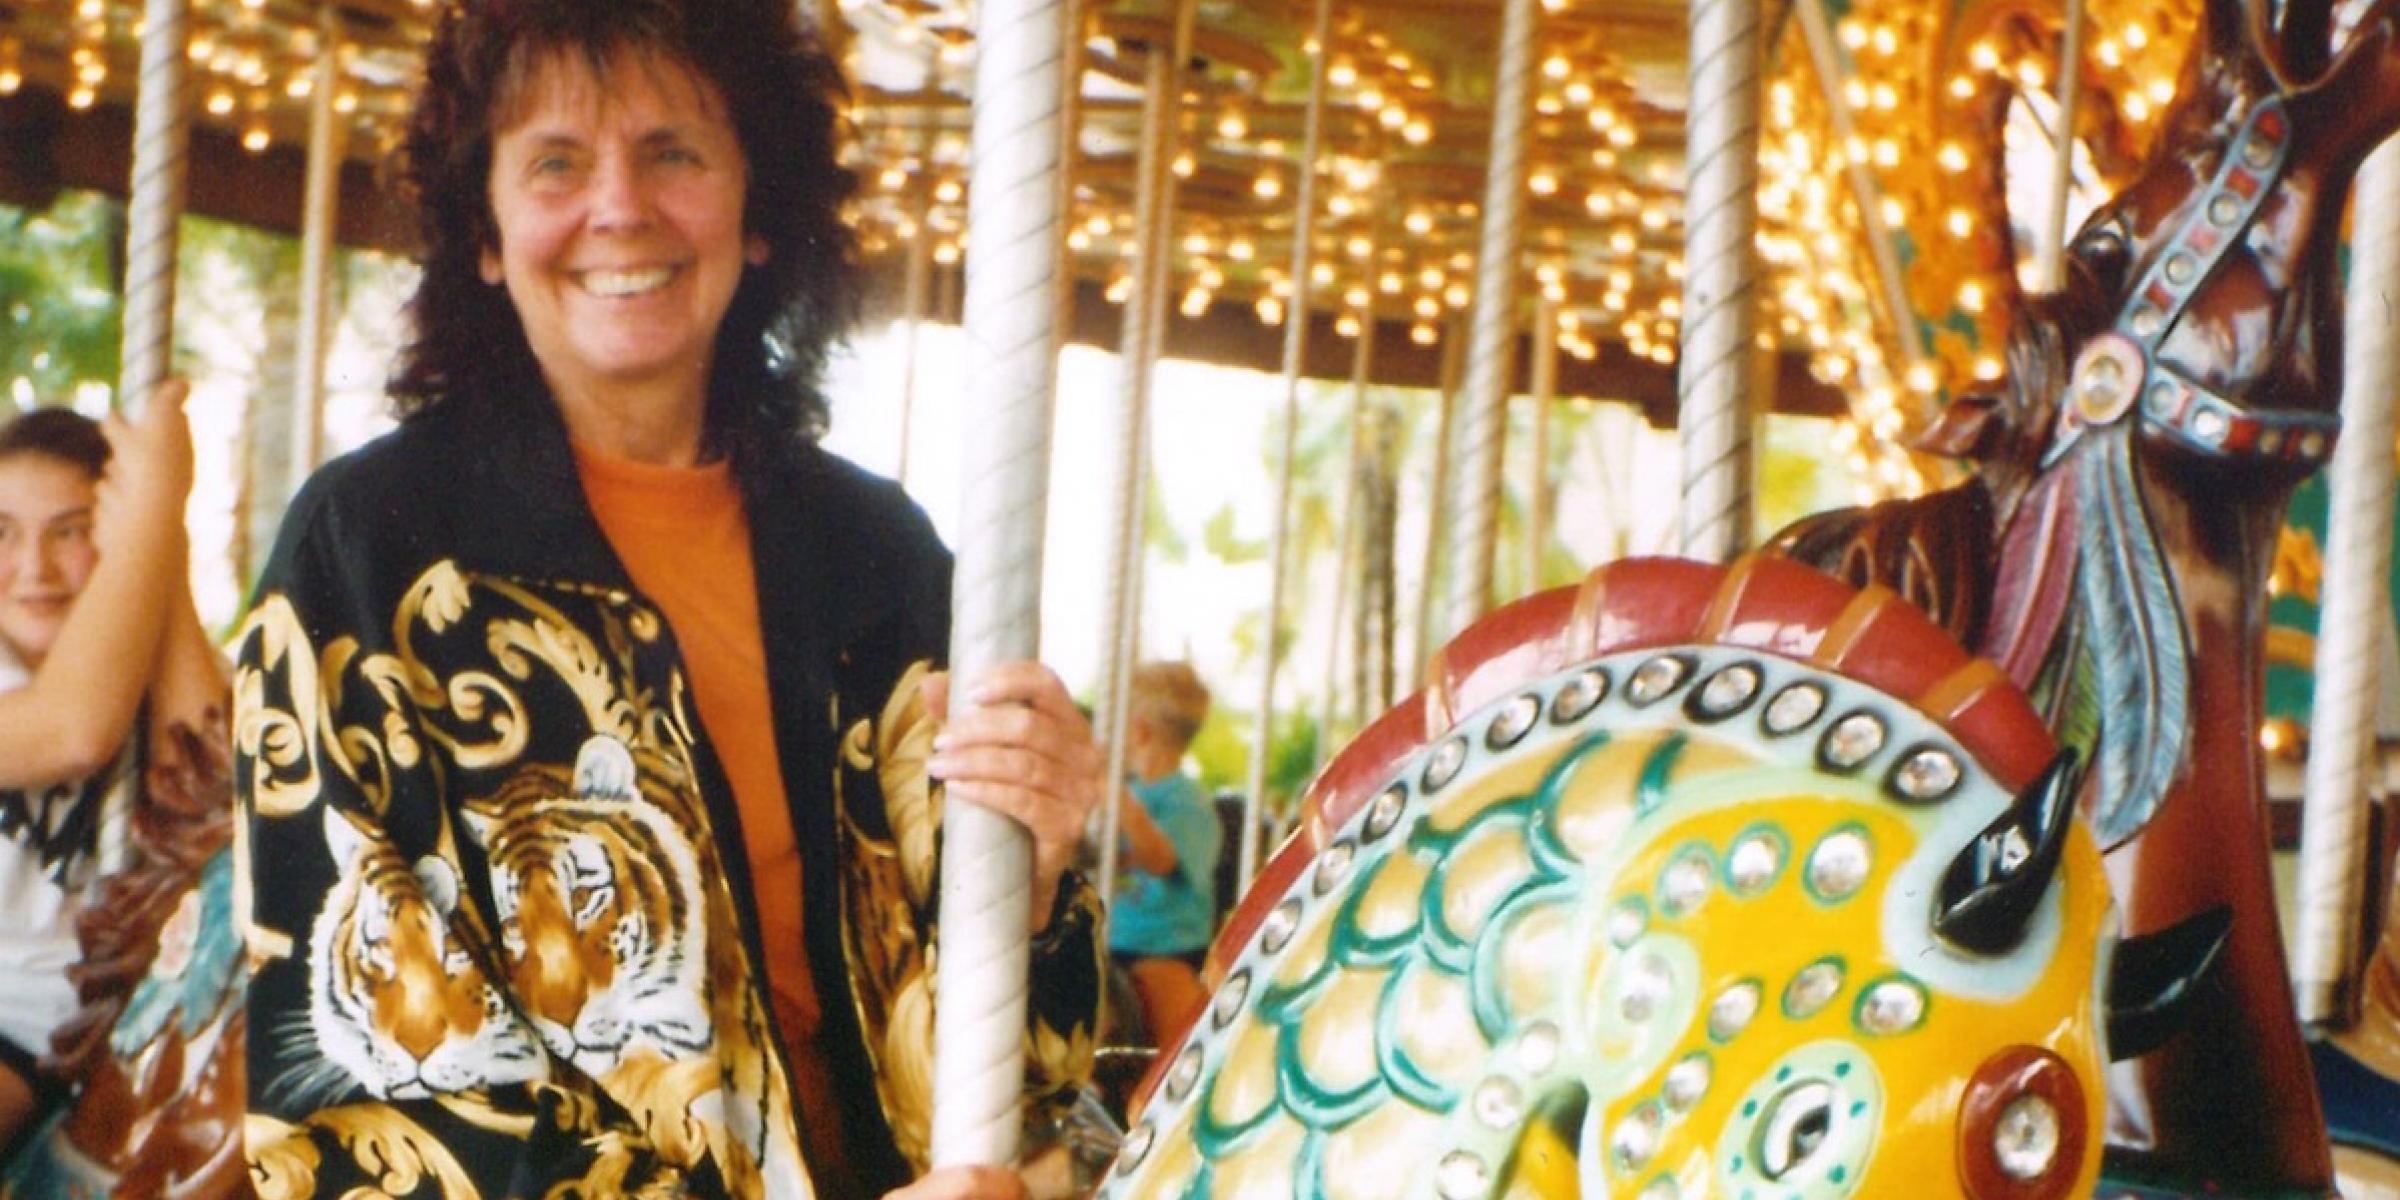 Julie riding a carousel